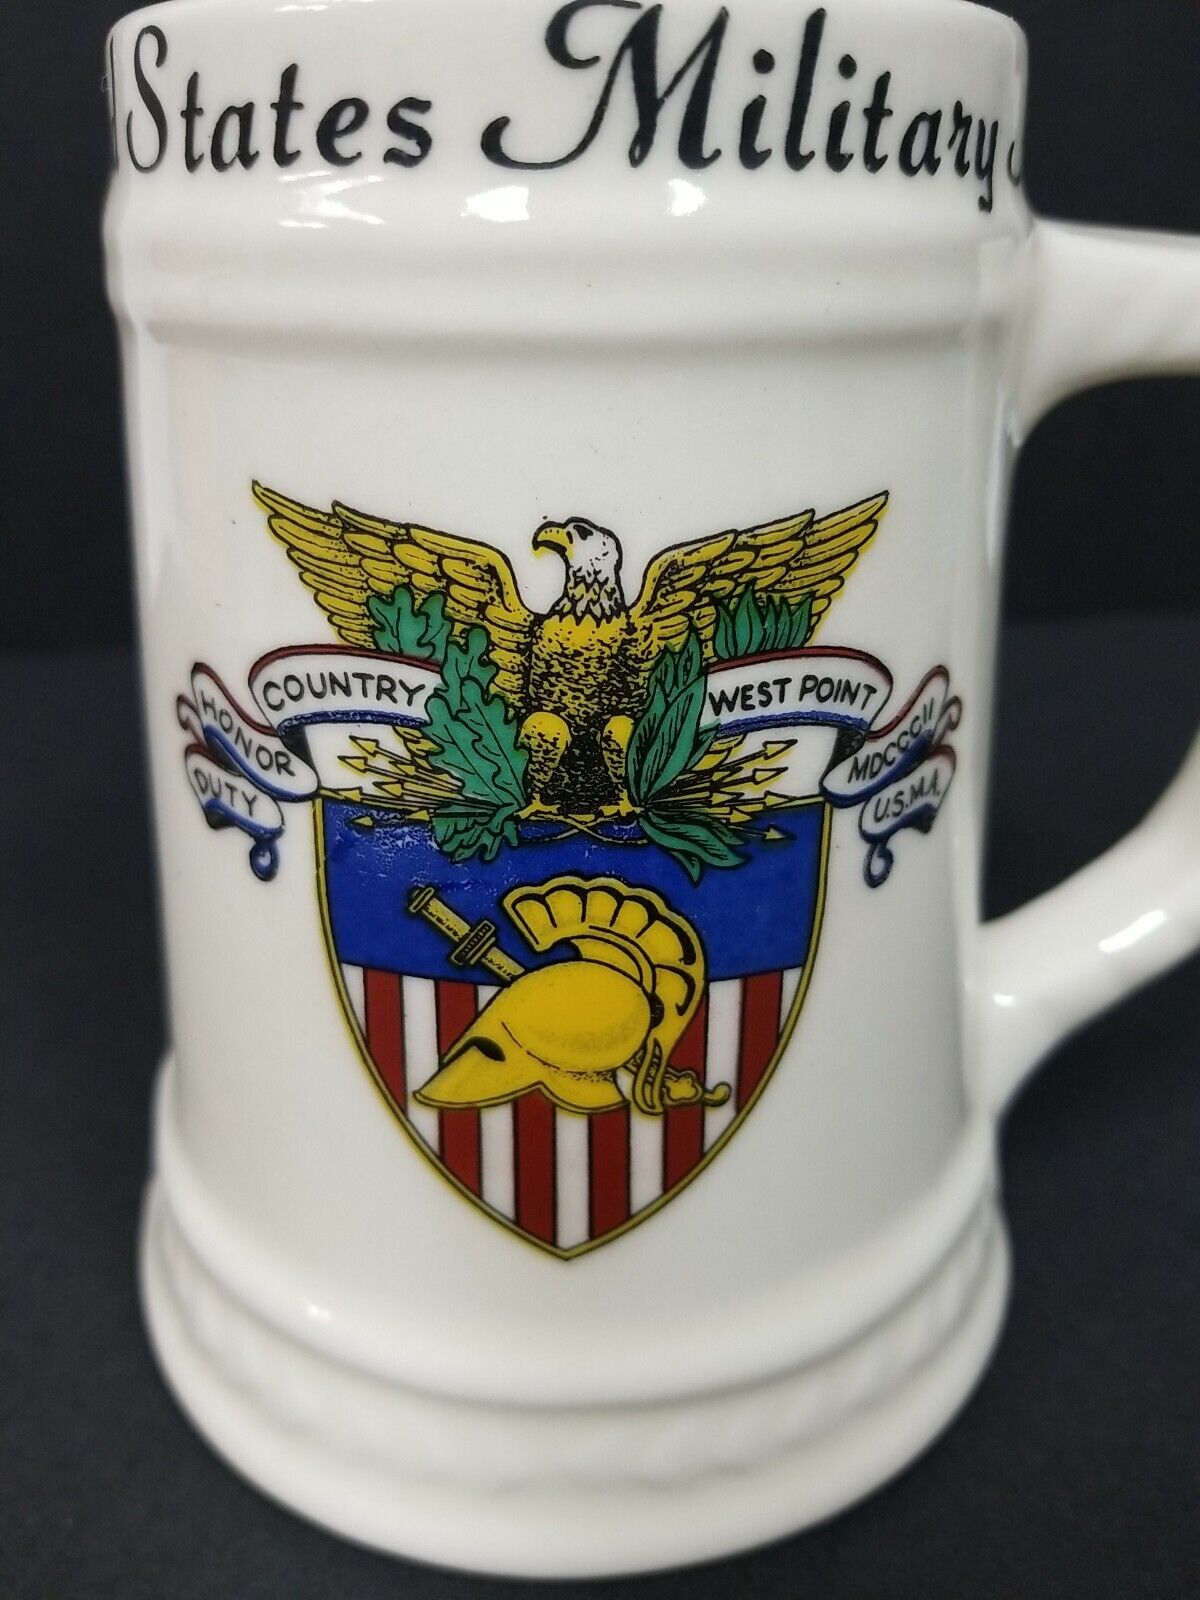  Vintage US Military Academy West Point Beer Stein Mug Imperal brand